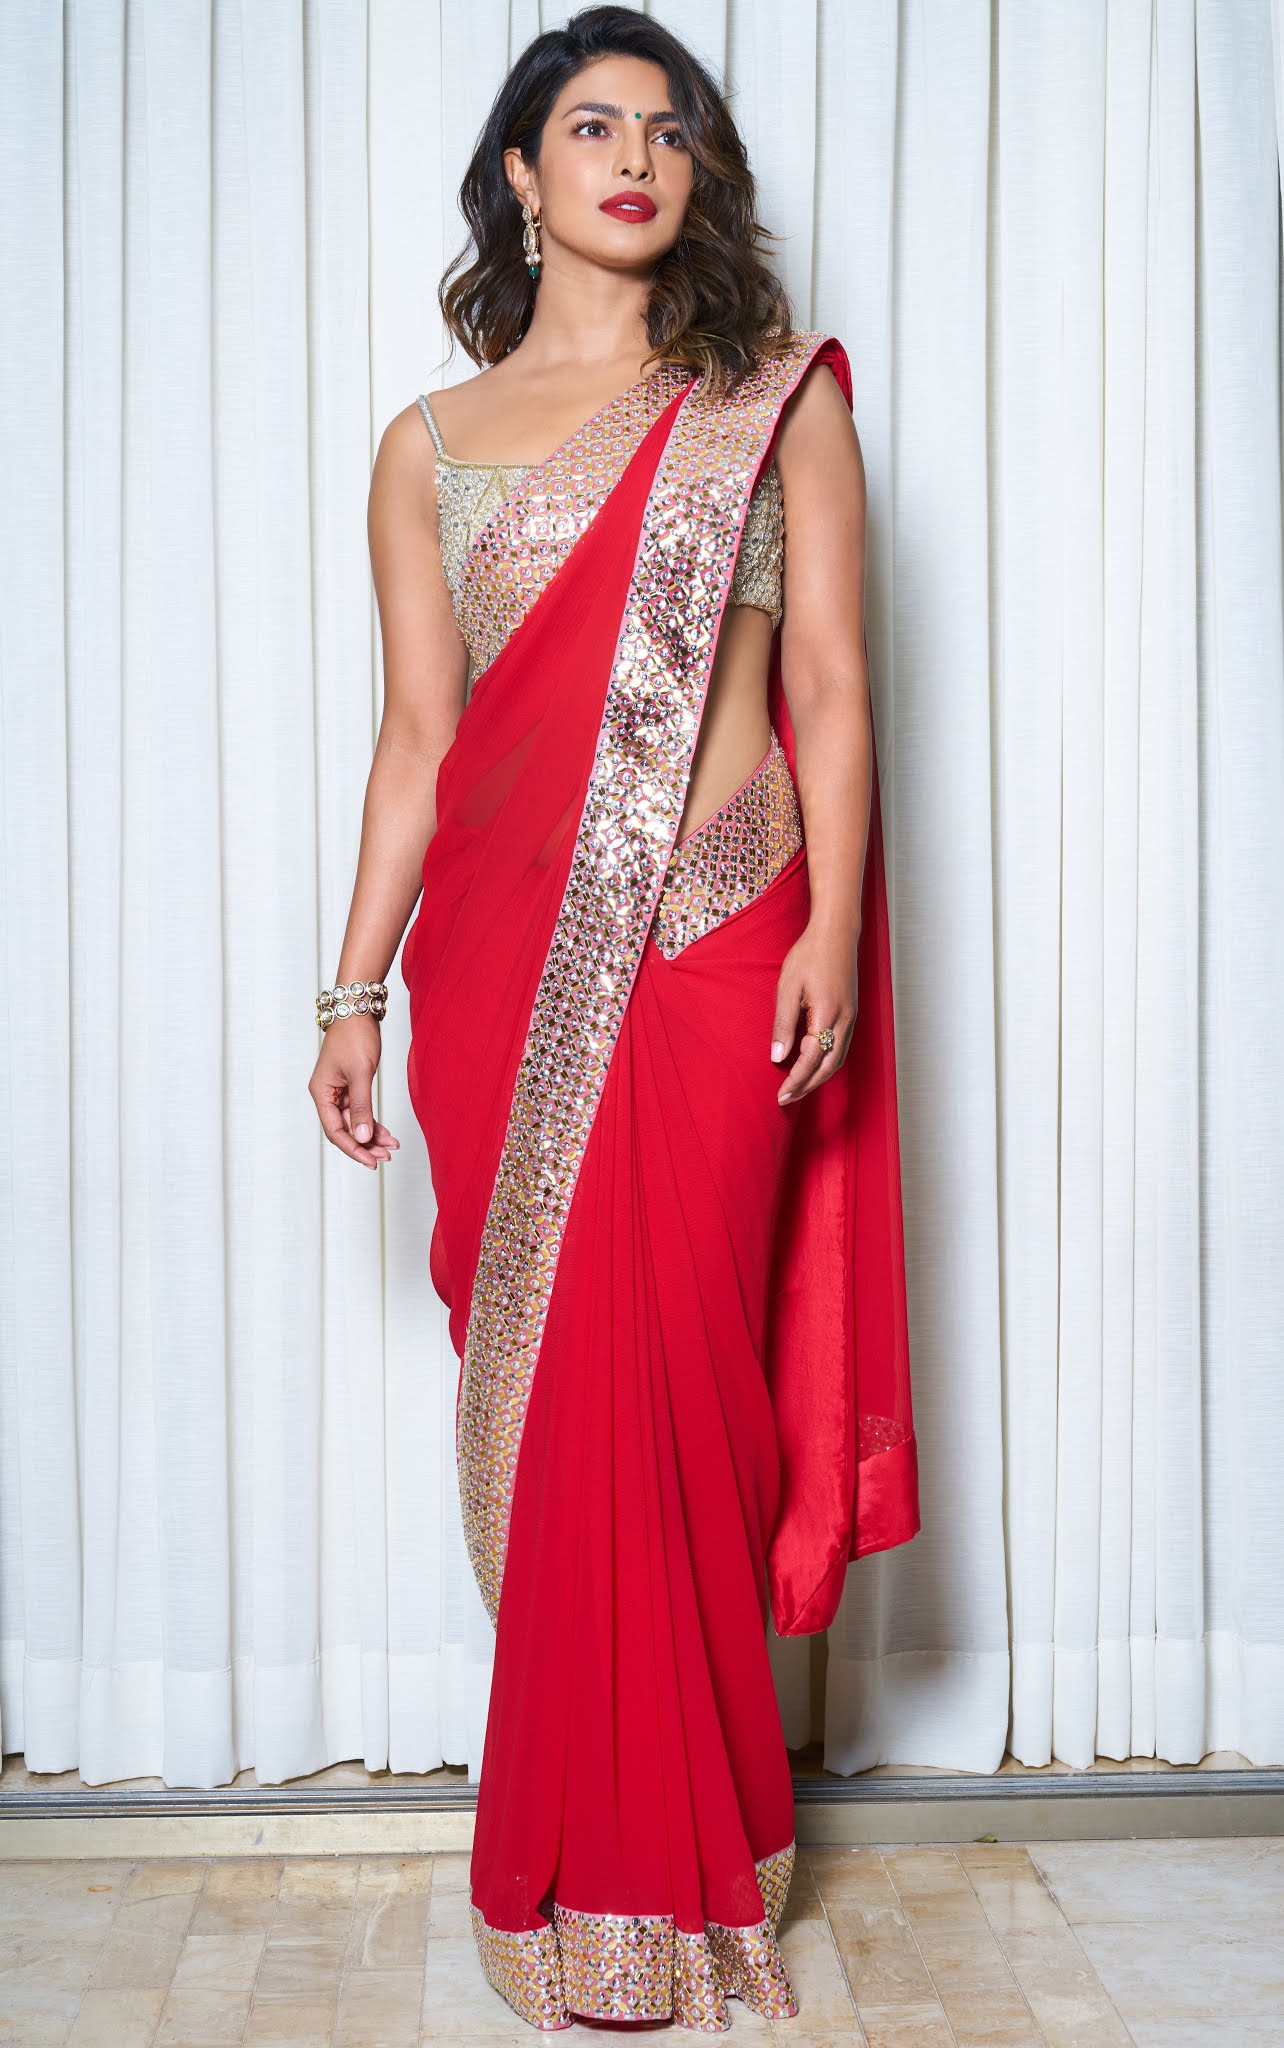 Priyanka Chopra HD UHD & High Re-Solution Photo - Navel Queens Navel Queens